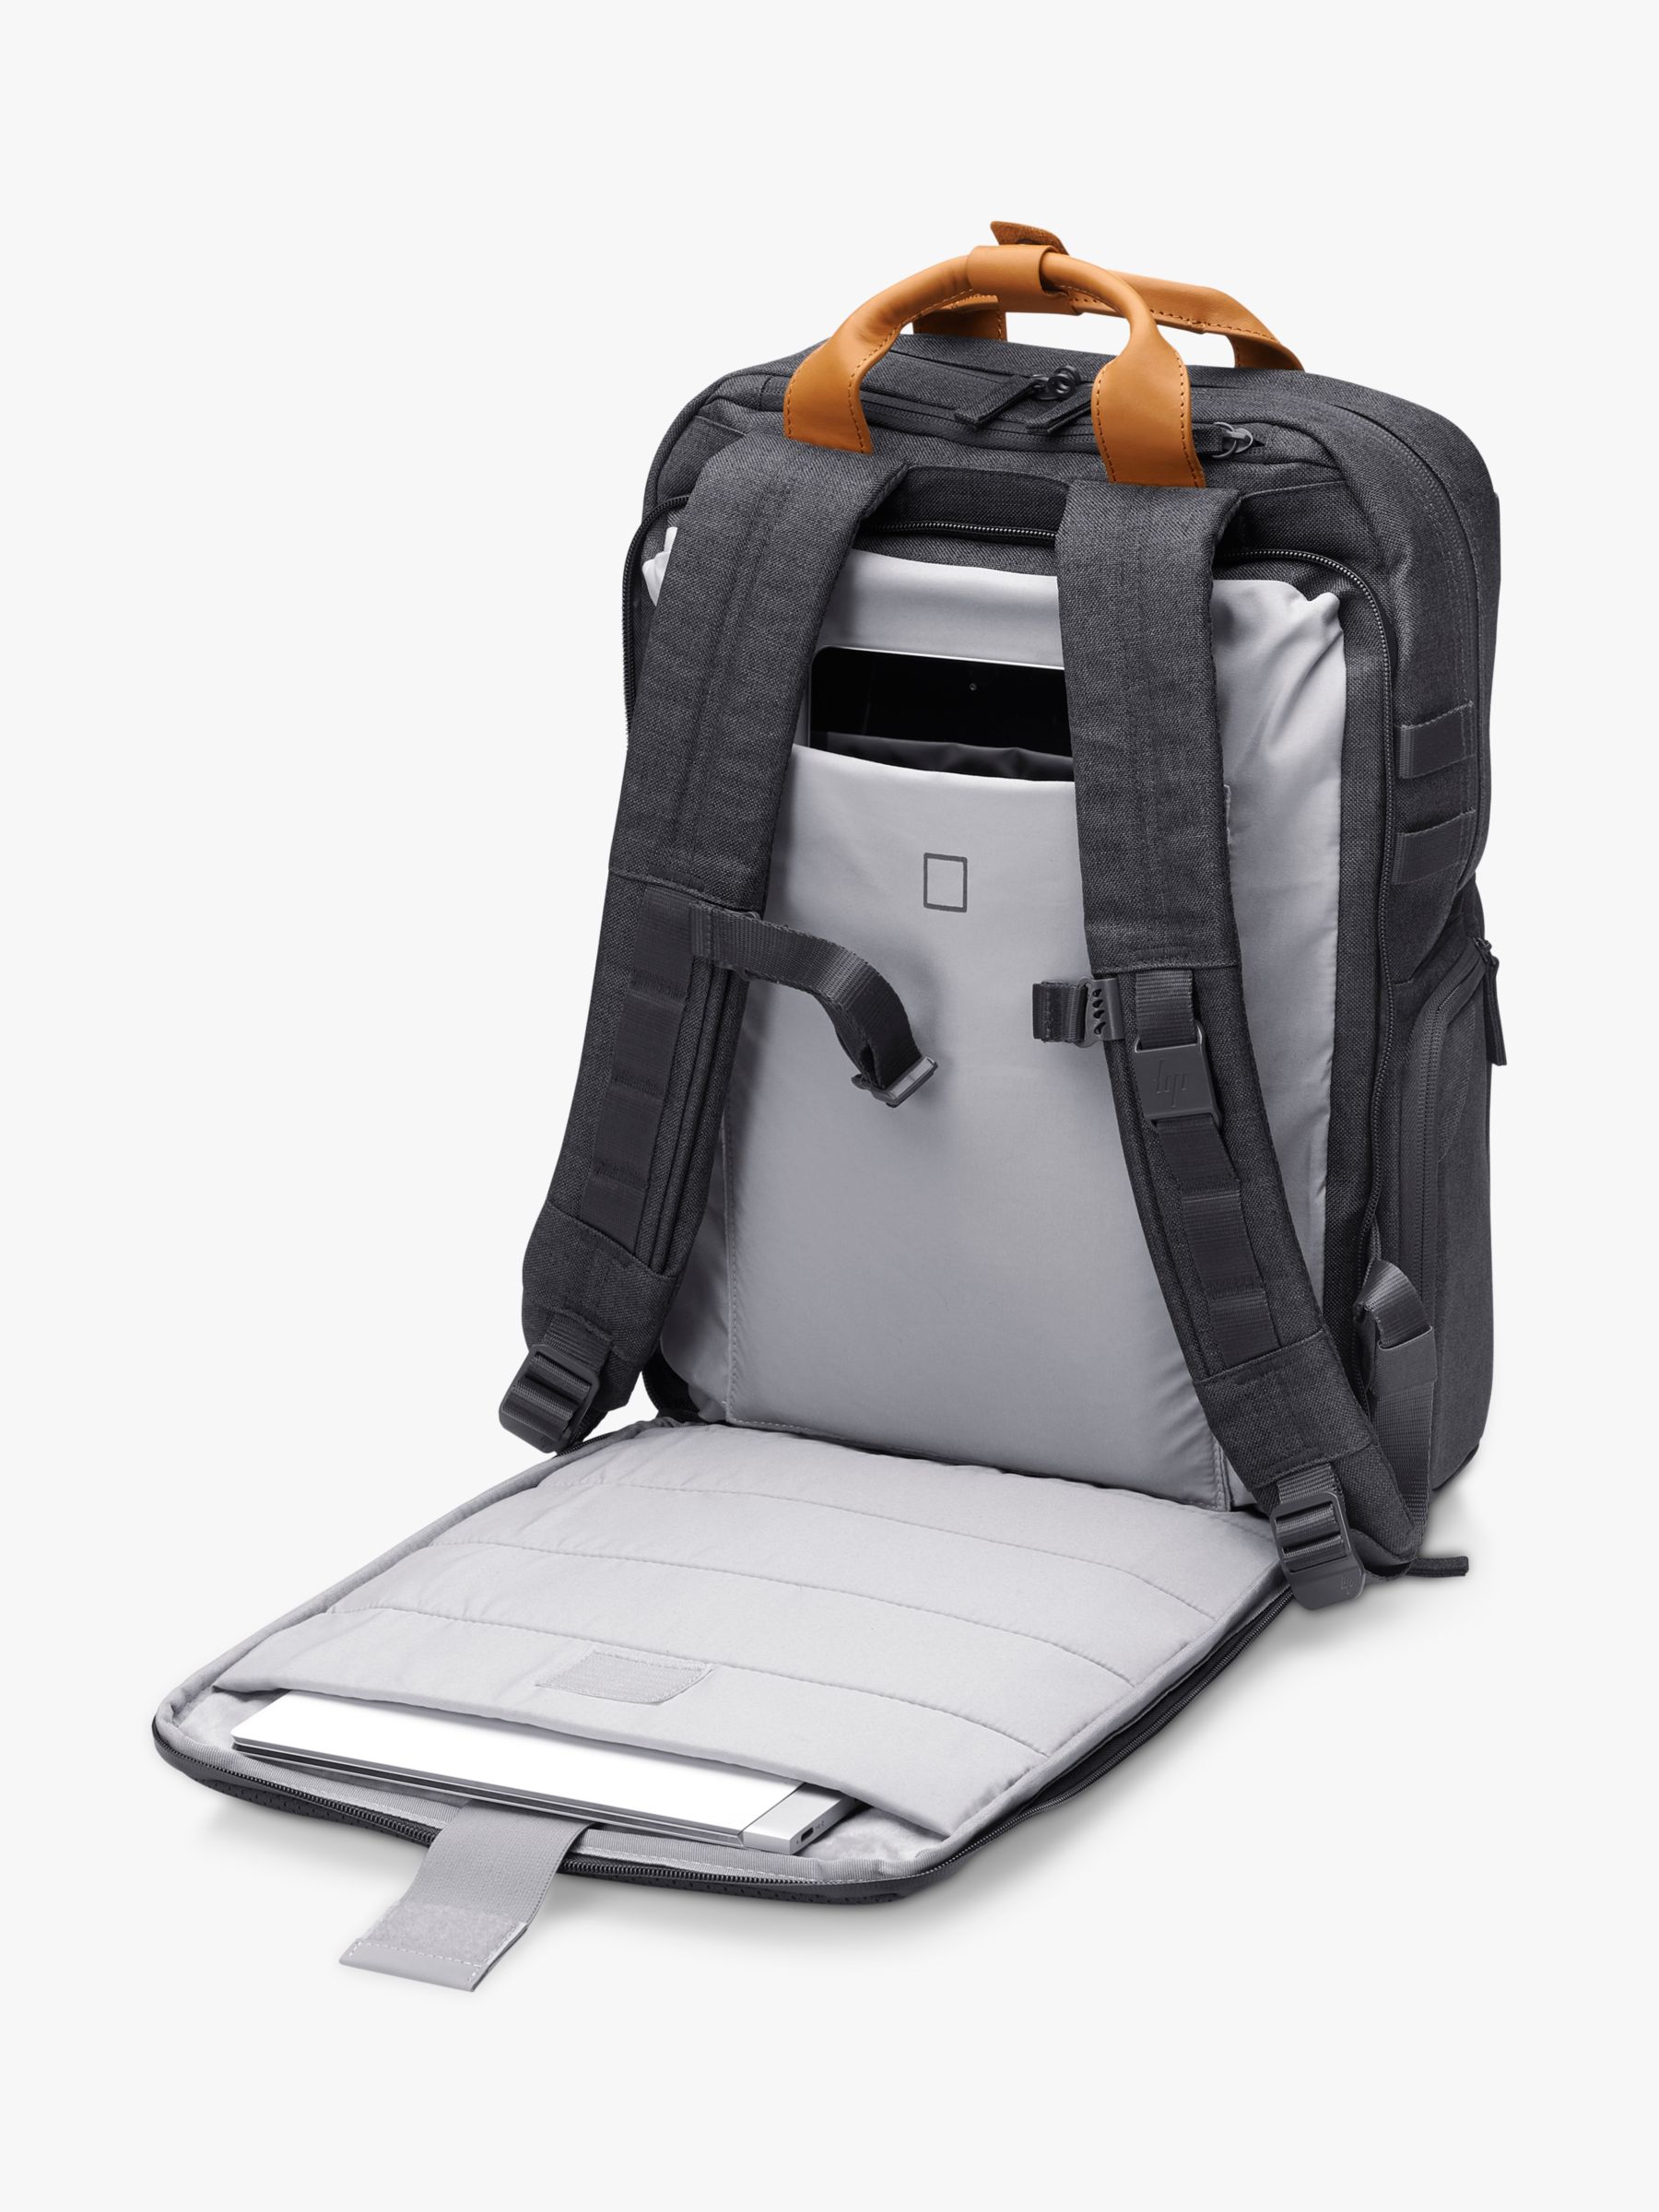 Hp Envy Urban 15 6 Laptop Backpack Grey At John Lewis Partners